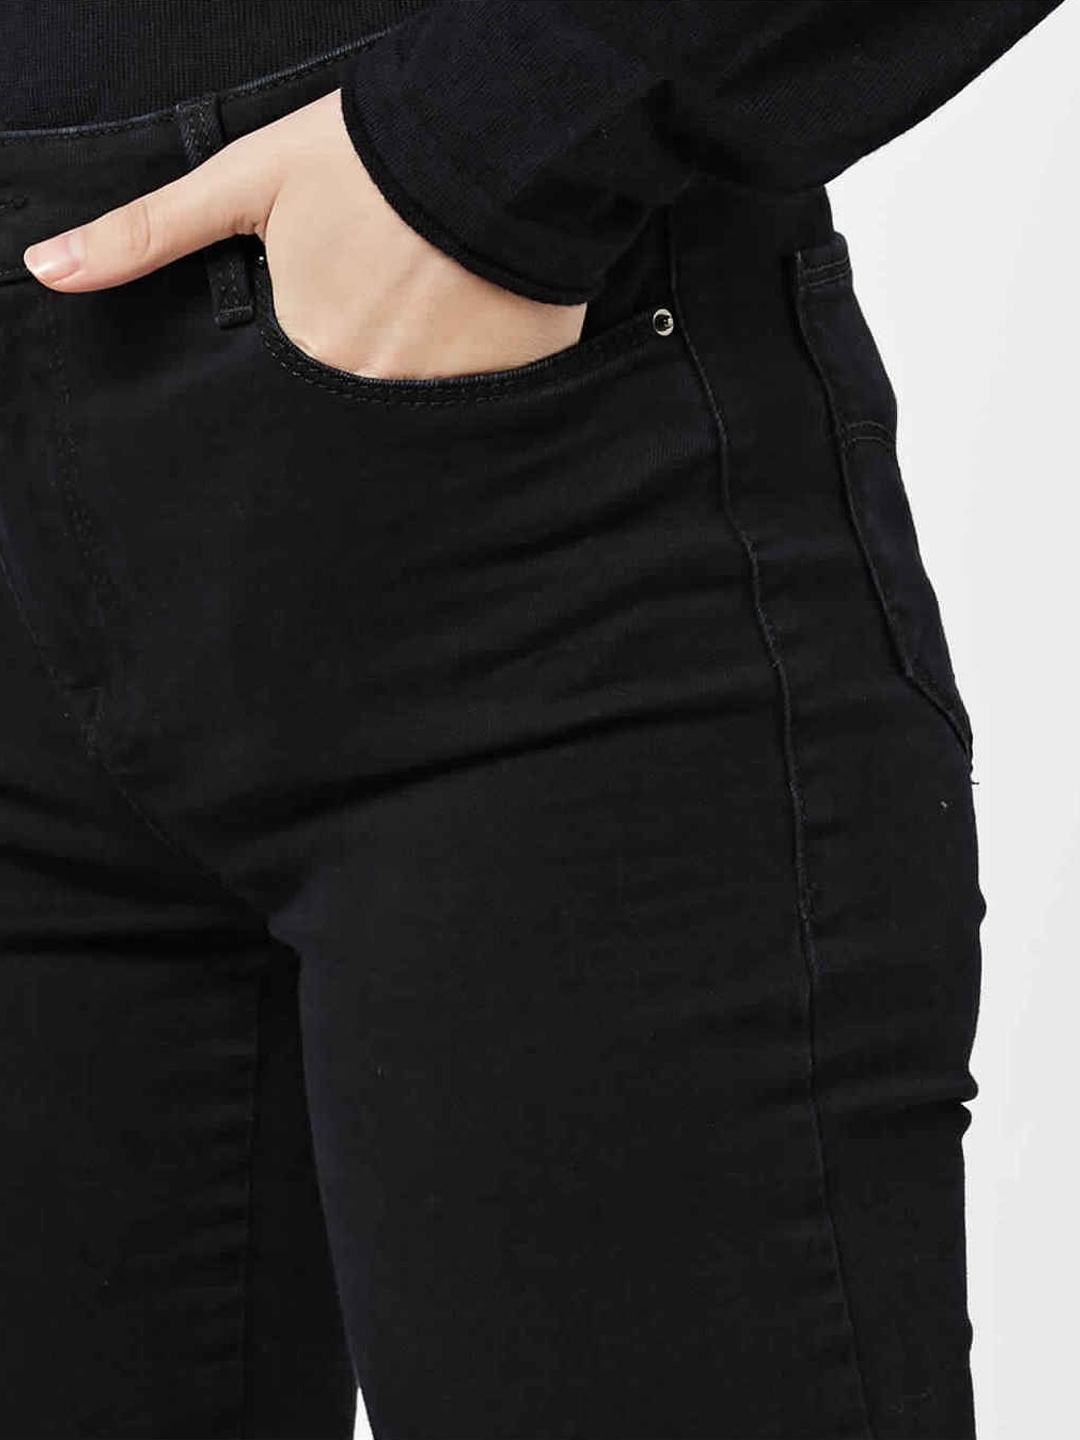 Women's flared Camilia jeans